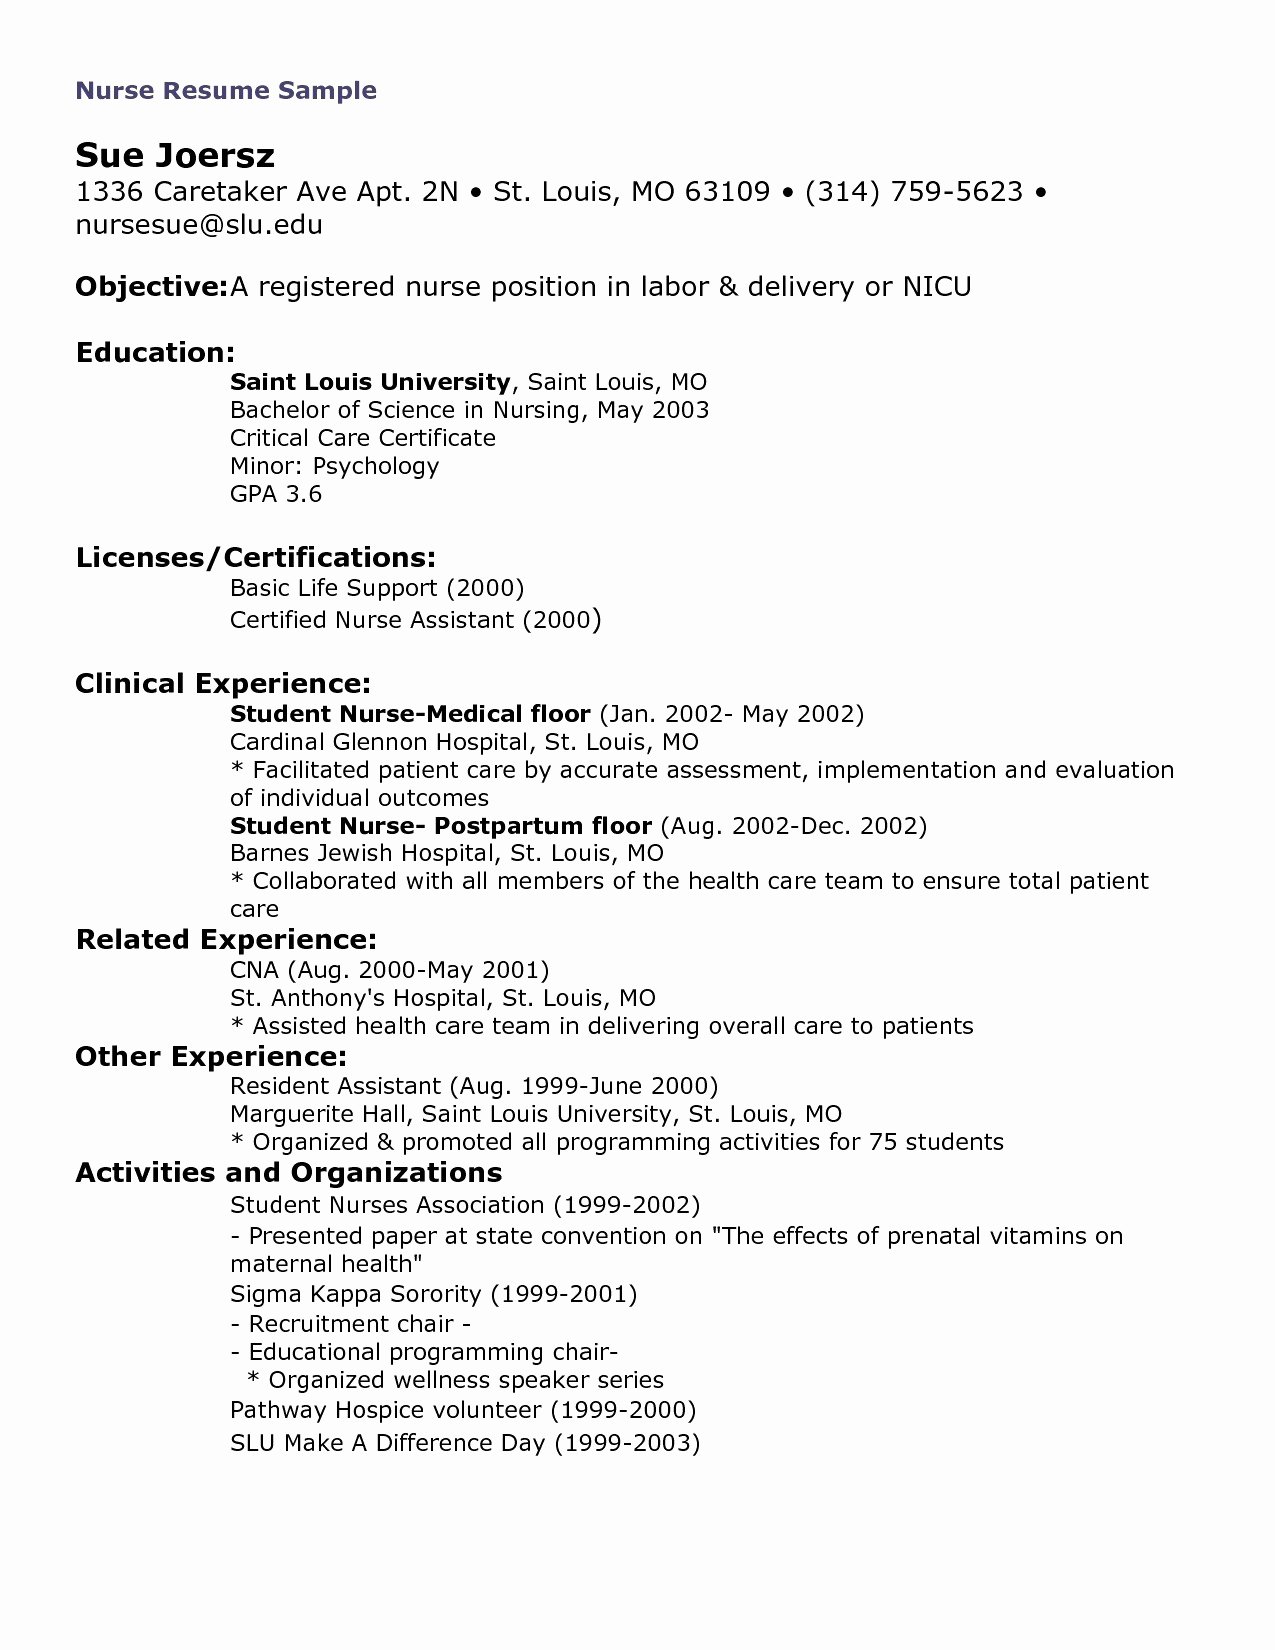 Resume Examples for Nurses New Nursing Resume Examples